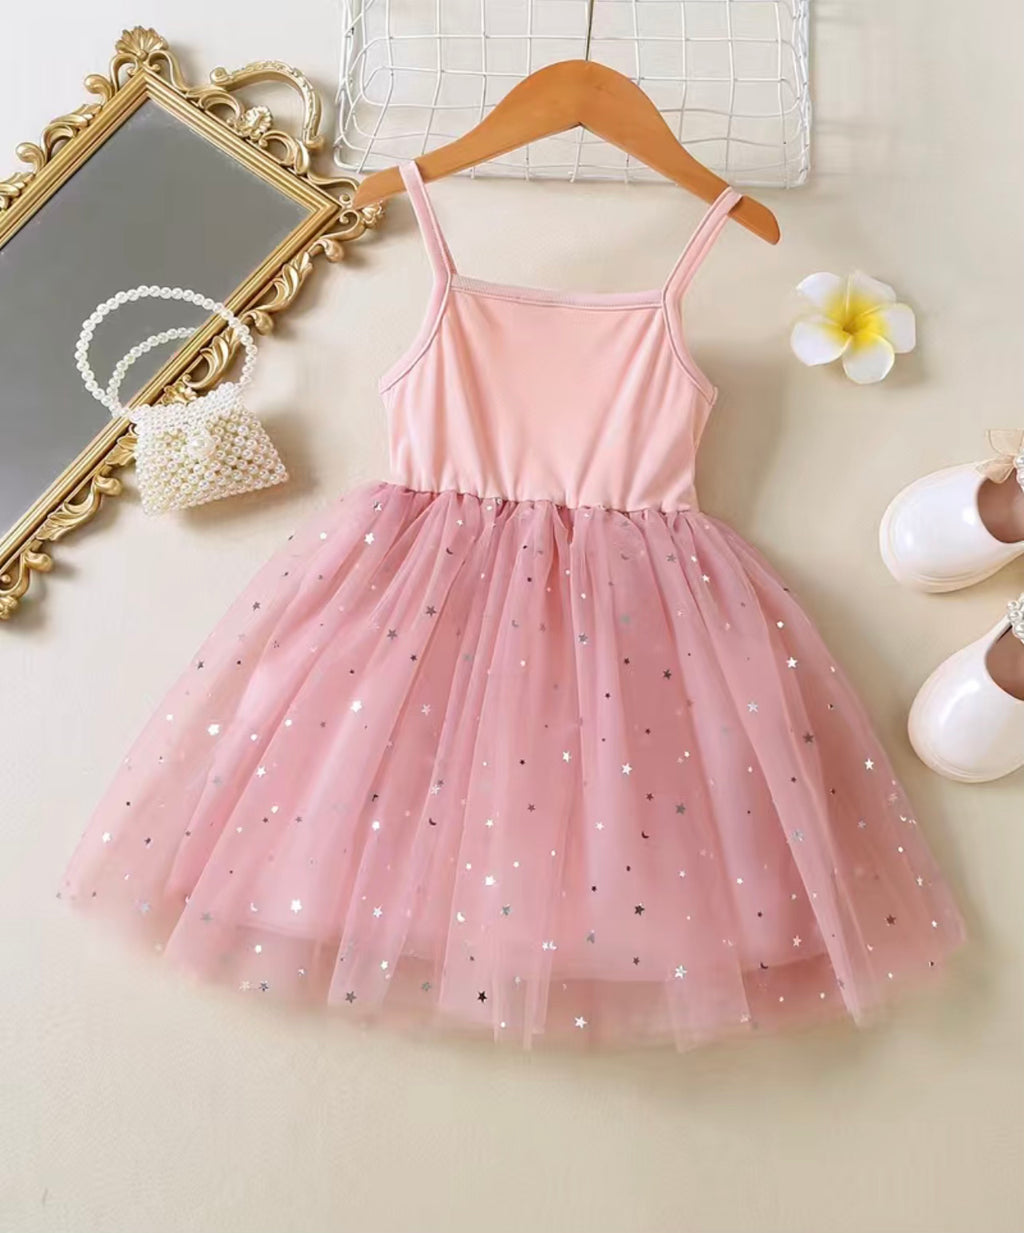 Pink Star Dress